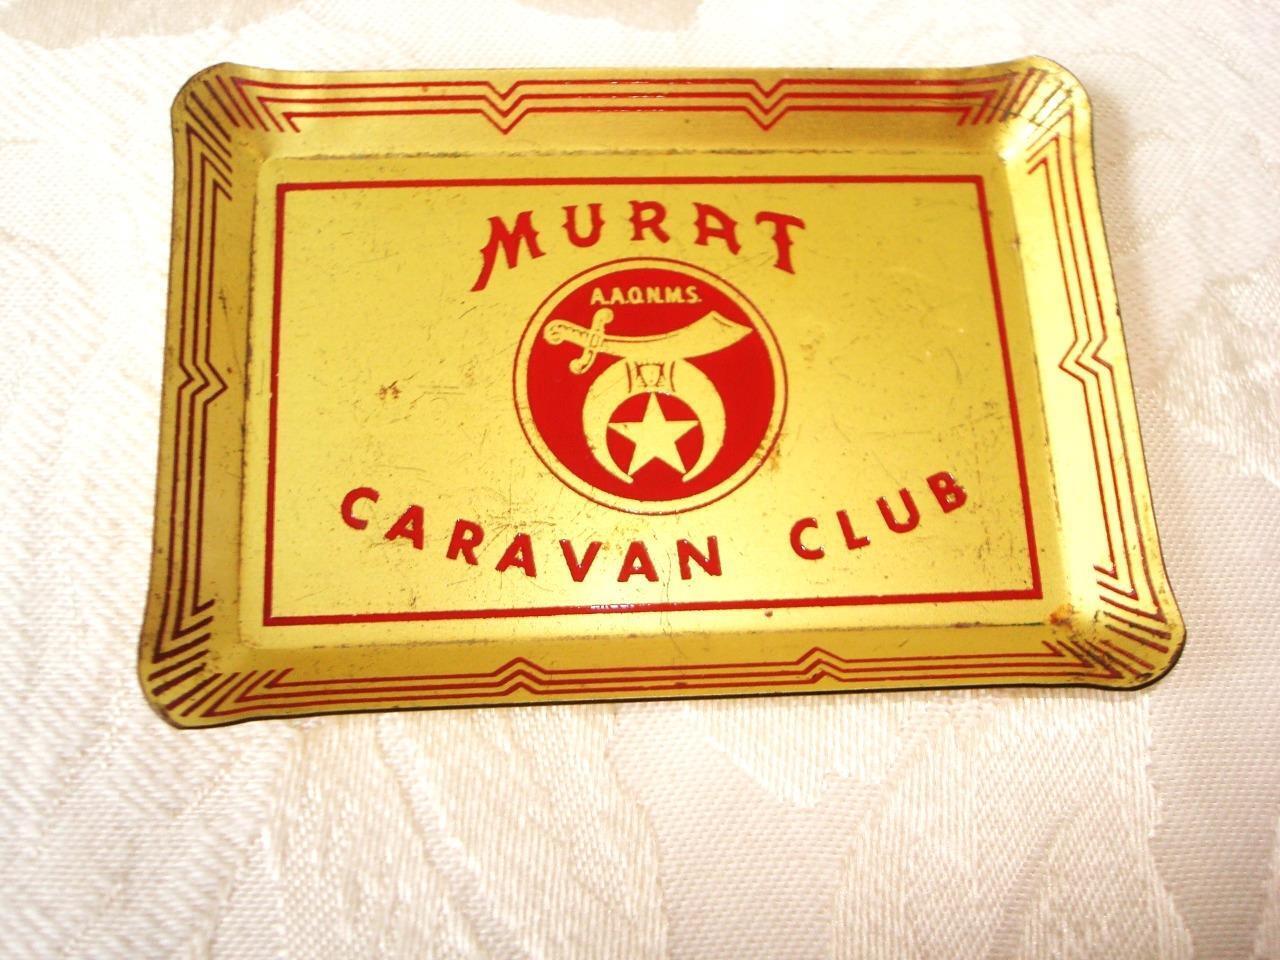 Vintage Murat A.A.O.N.M.S. Caravan Club Metal Tip Tray Shriner Memorabilia